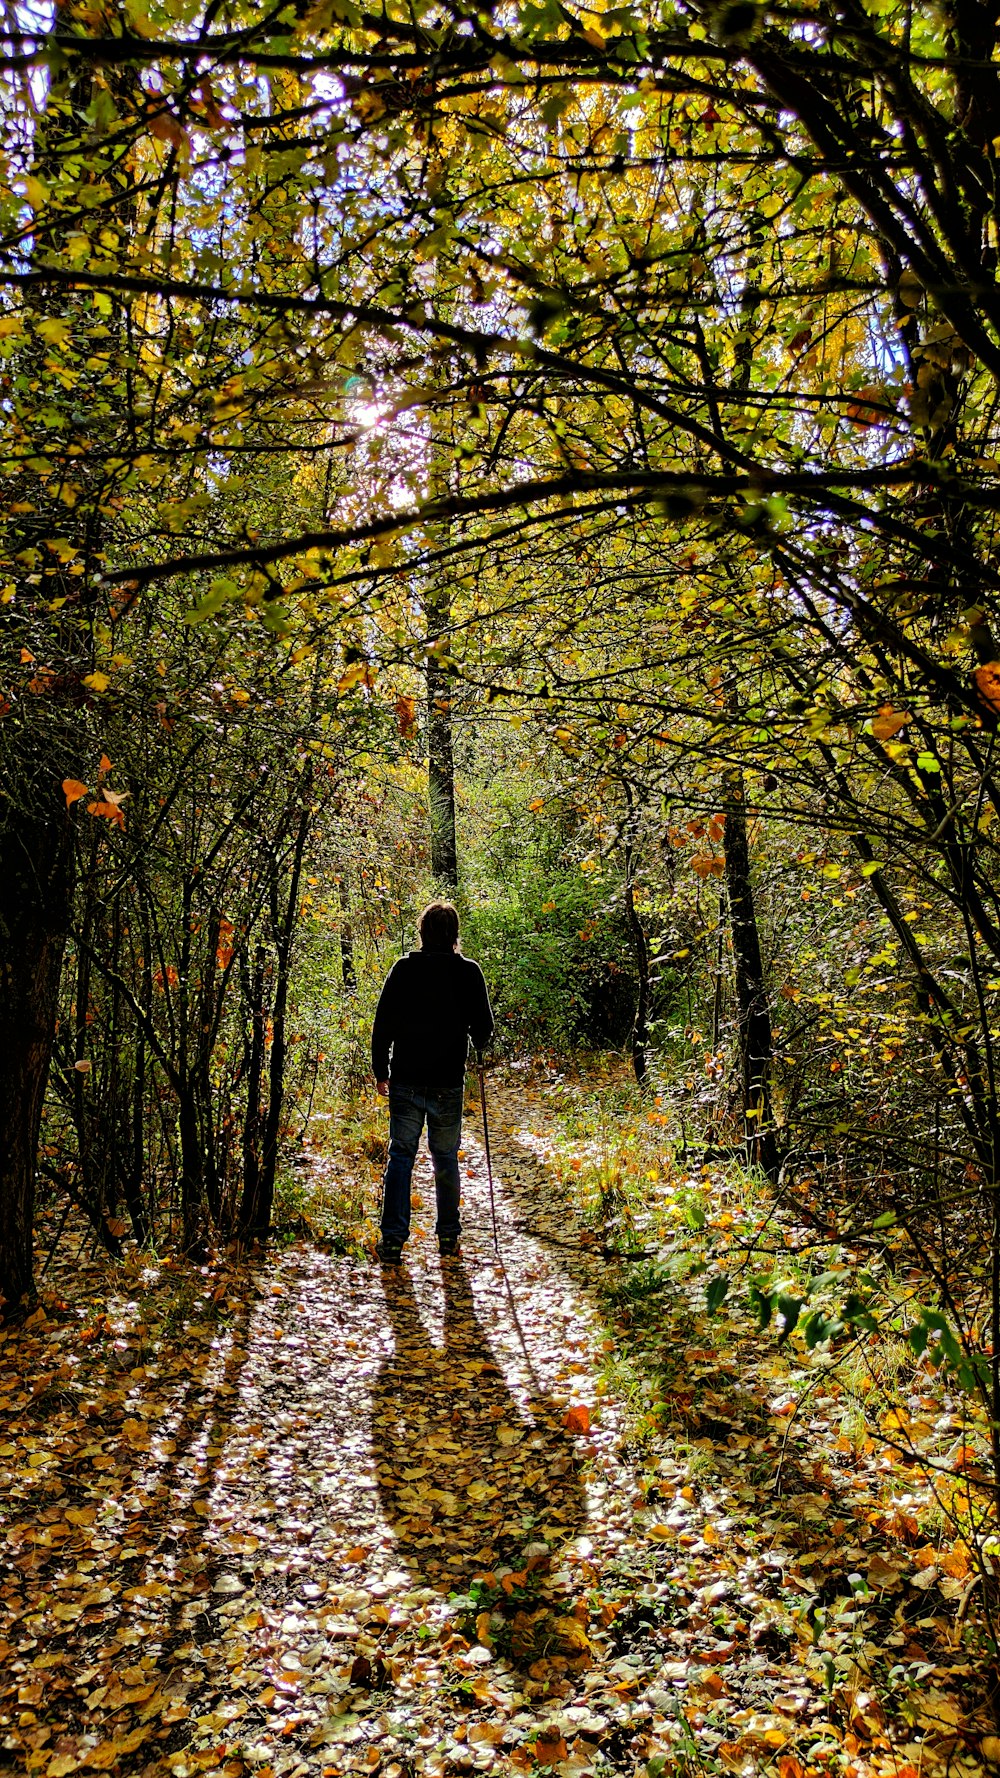 man in black jacket walking on pathway between trees during daytime